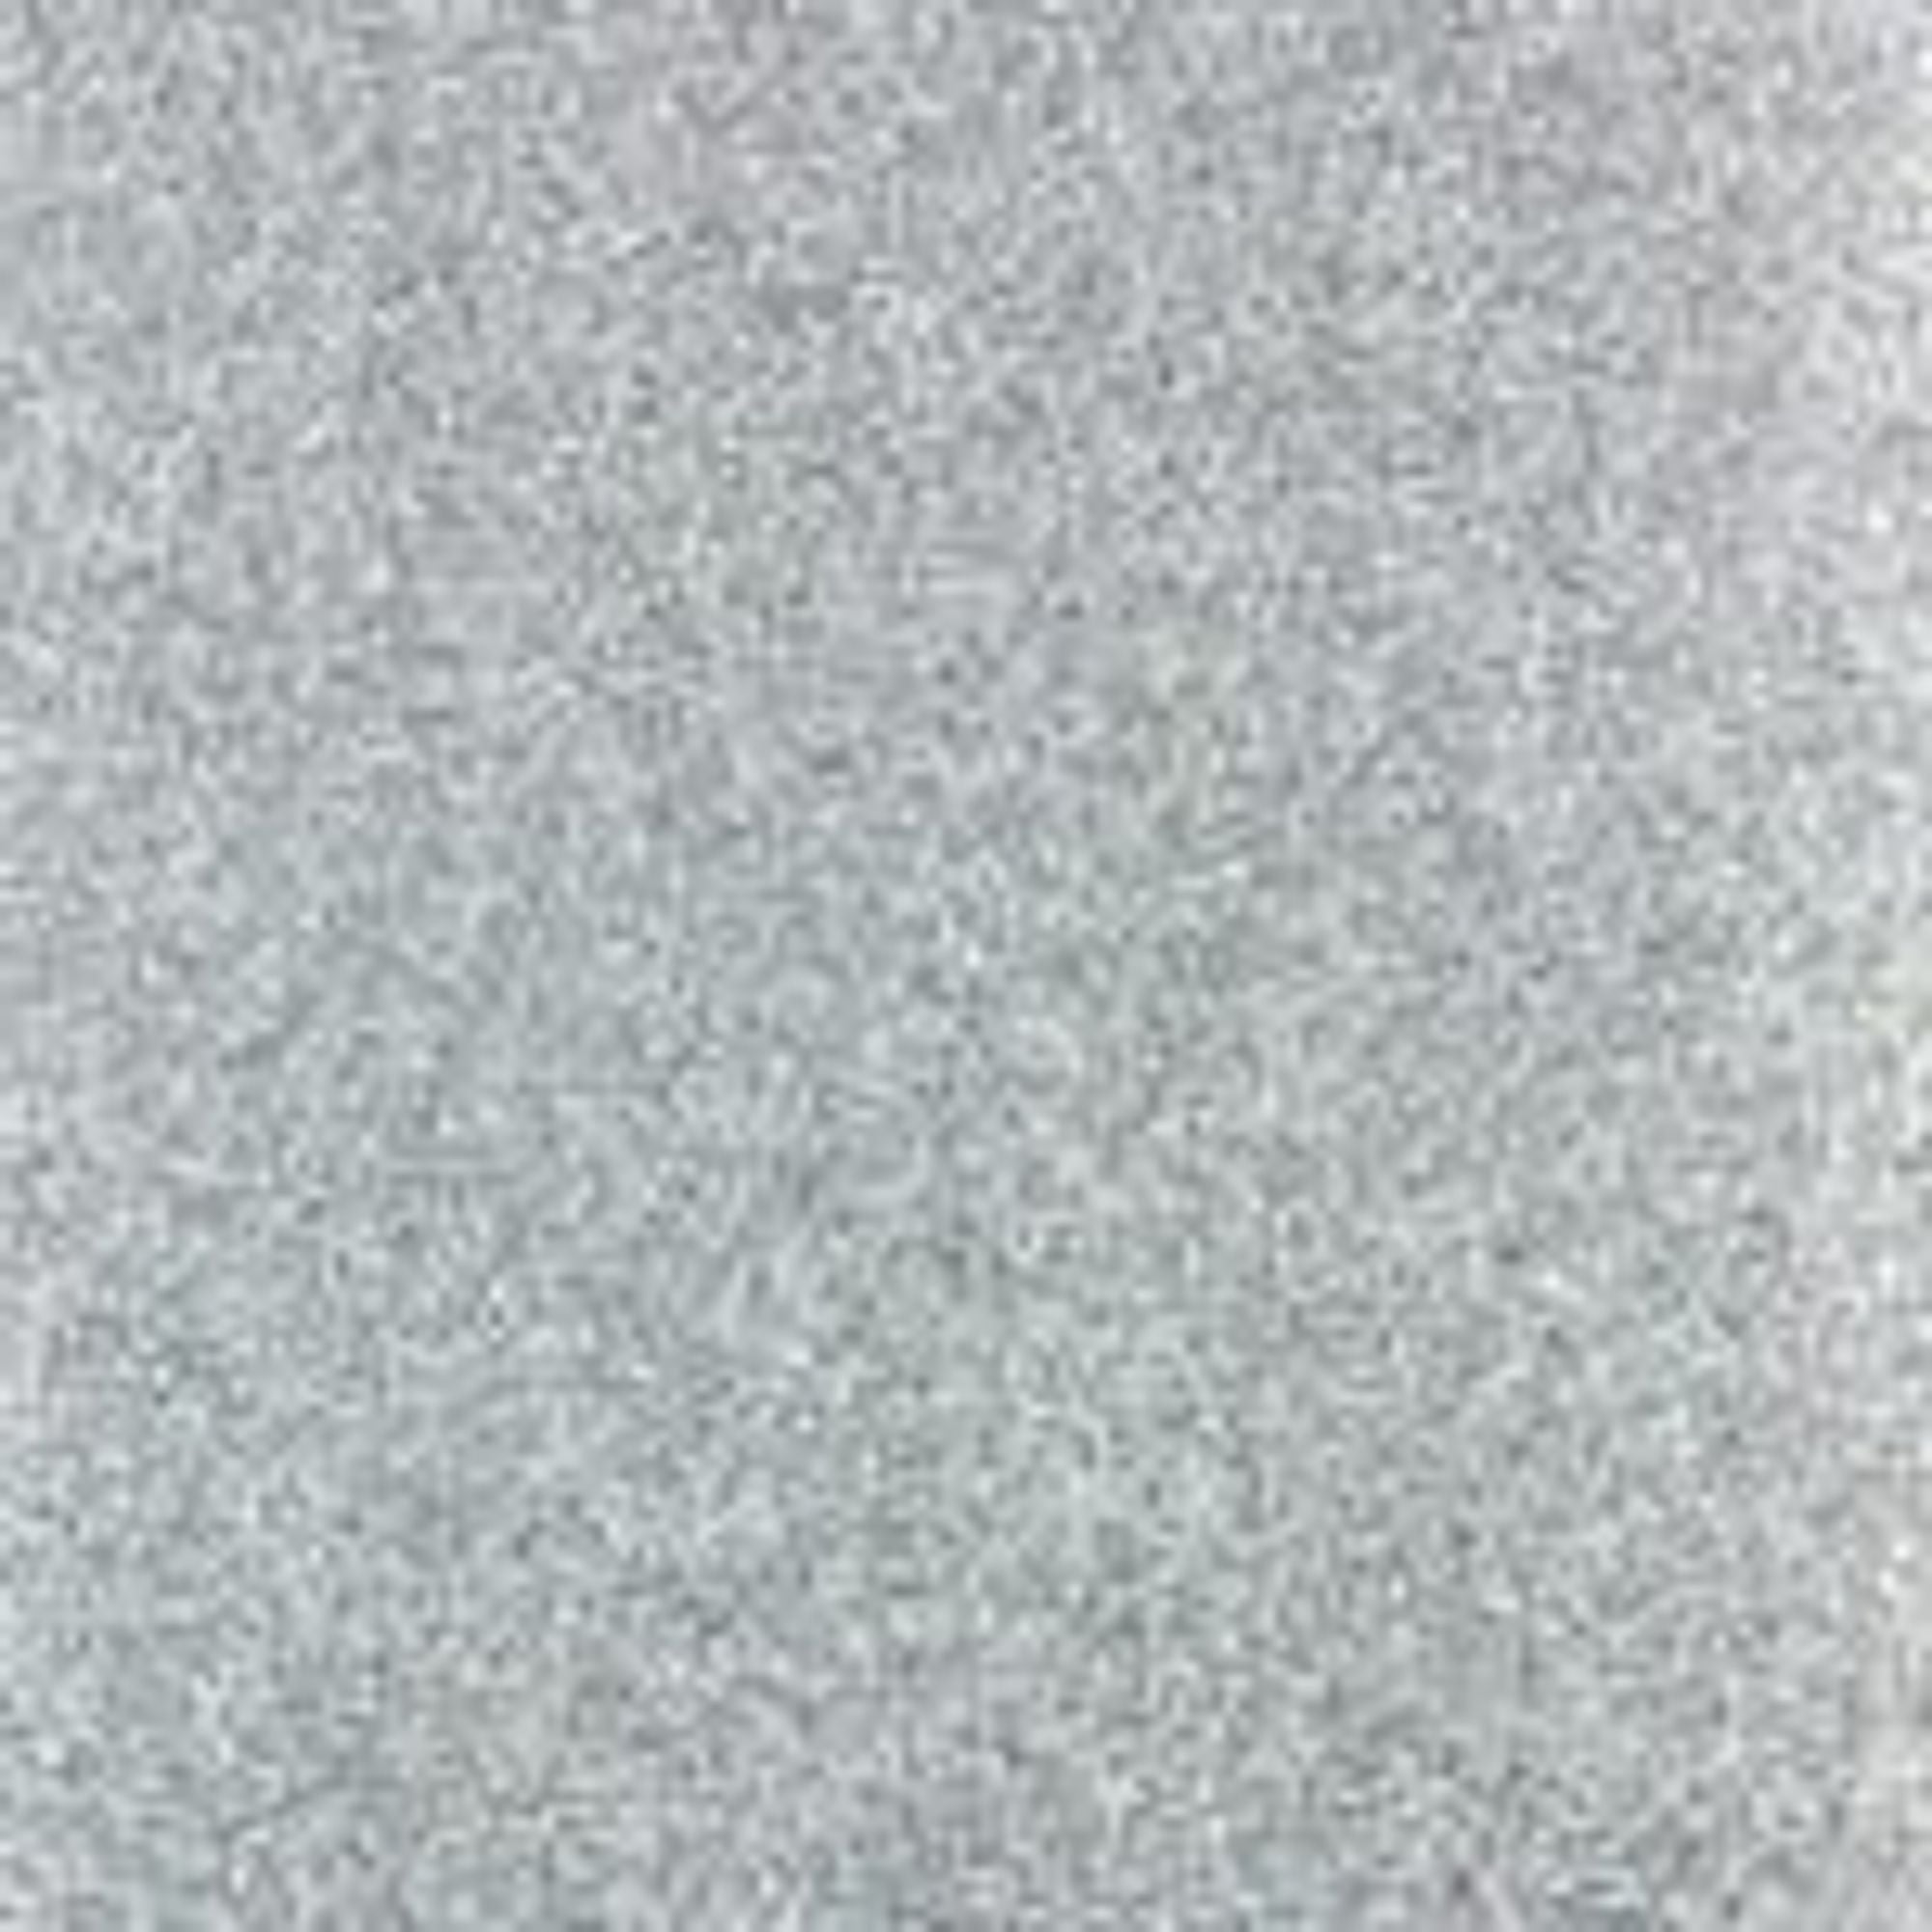 ETC 12x12 Glitter Cardstock - White – Legacy Paper Arts